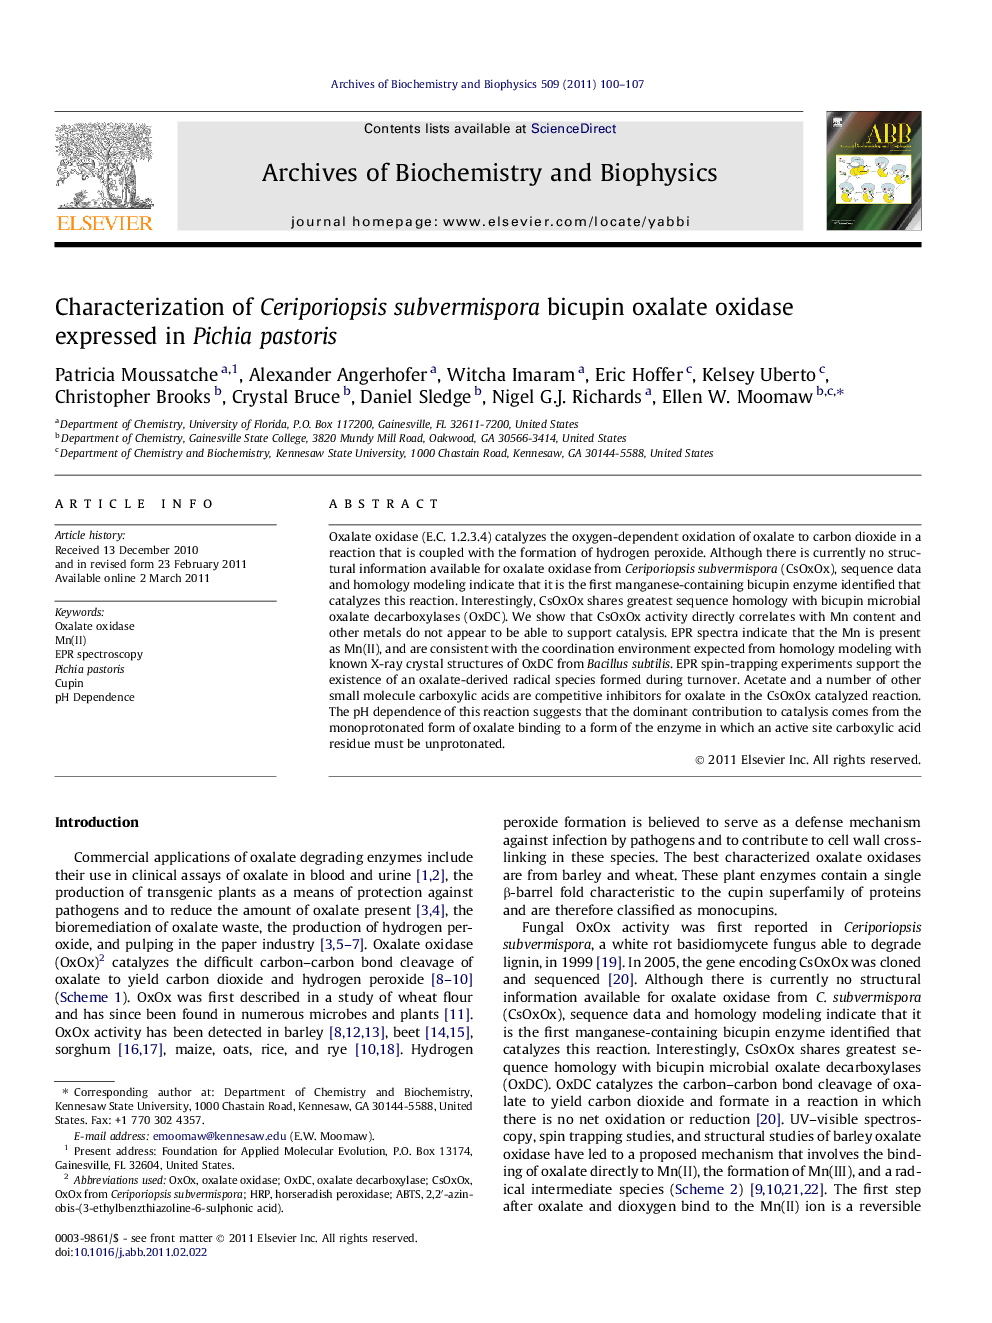 Characterization of Ceriporiopsis subvermispora bicupin oxalate oxidase expressed in Pichia pastoris